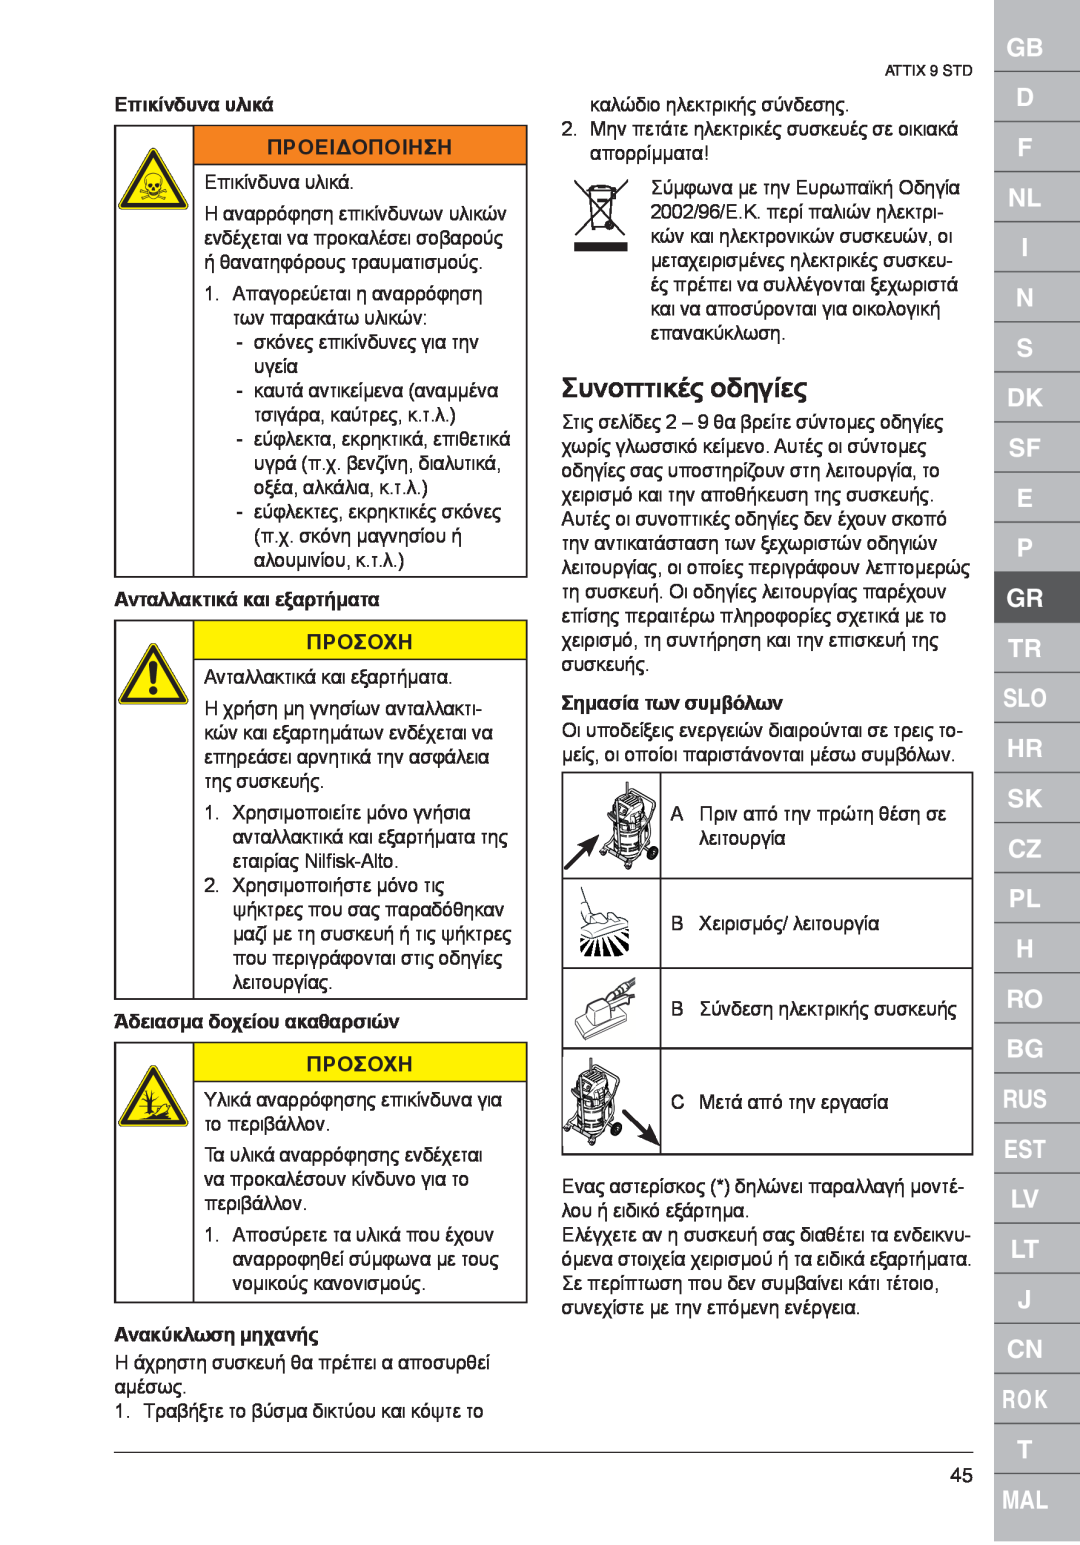 Nilfisk-ALTO ATTIX 961-01 Συνοπτικές οδηγίες, Επικίνδυνα υλικά, Ανταλλακτικά και εξαρτήματα, Ανακύκλωση μηχανής, Προσοχη 